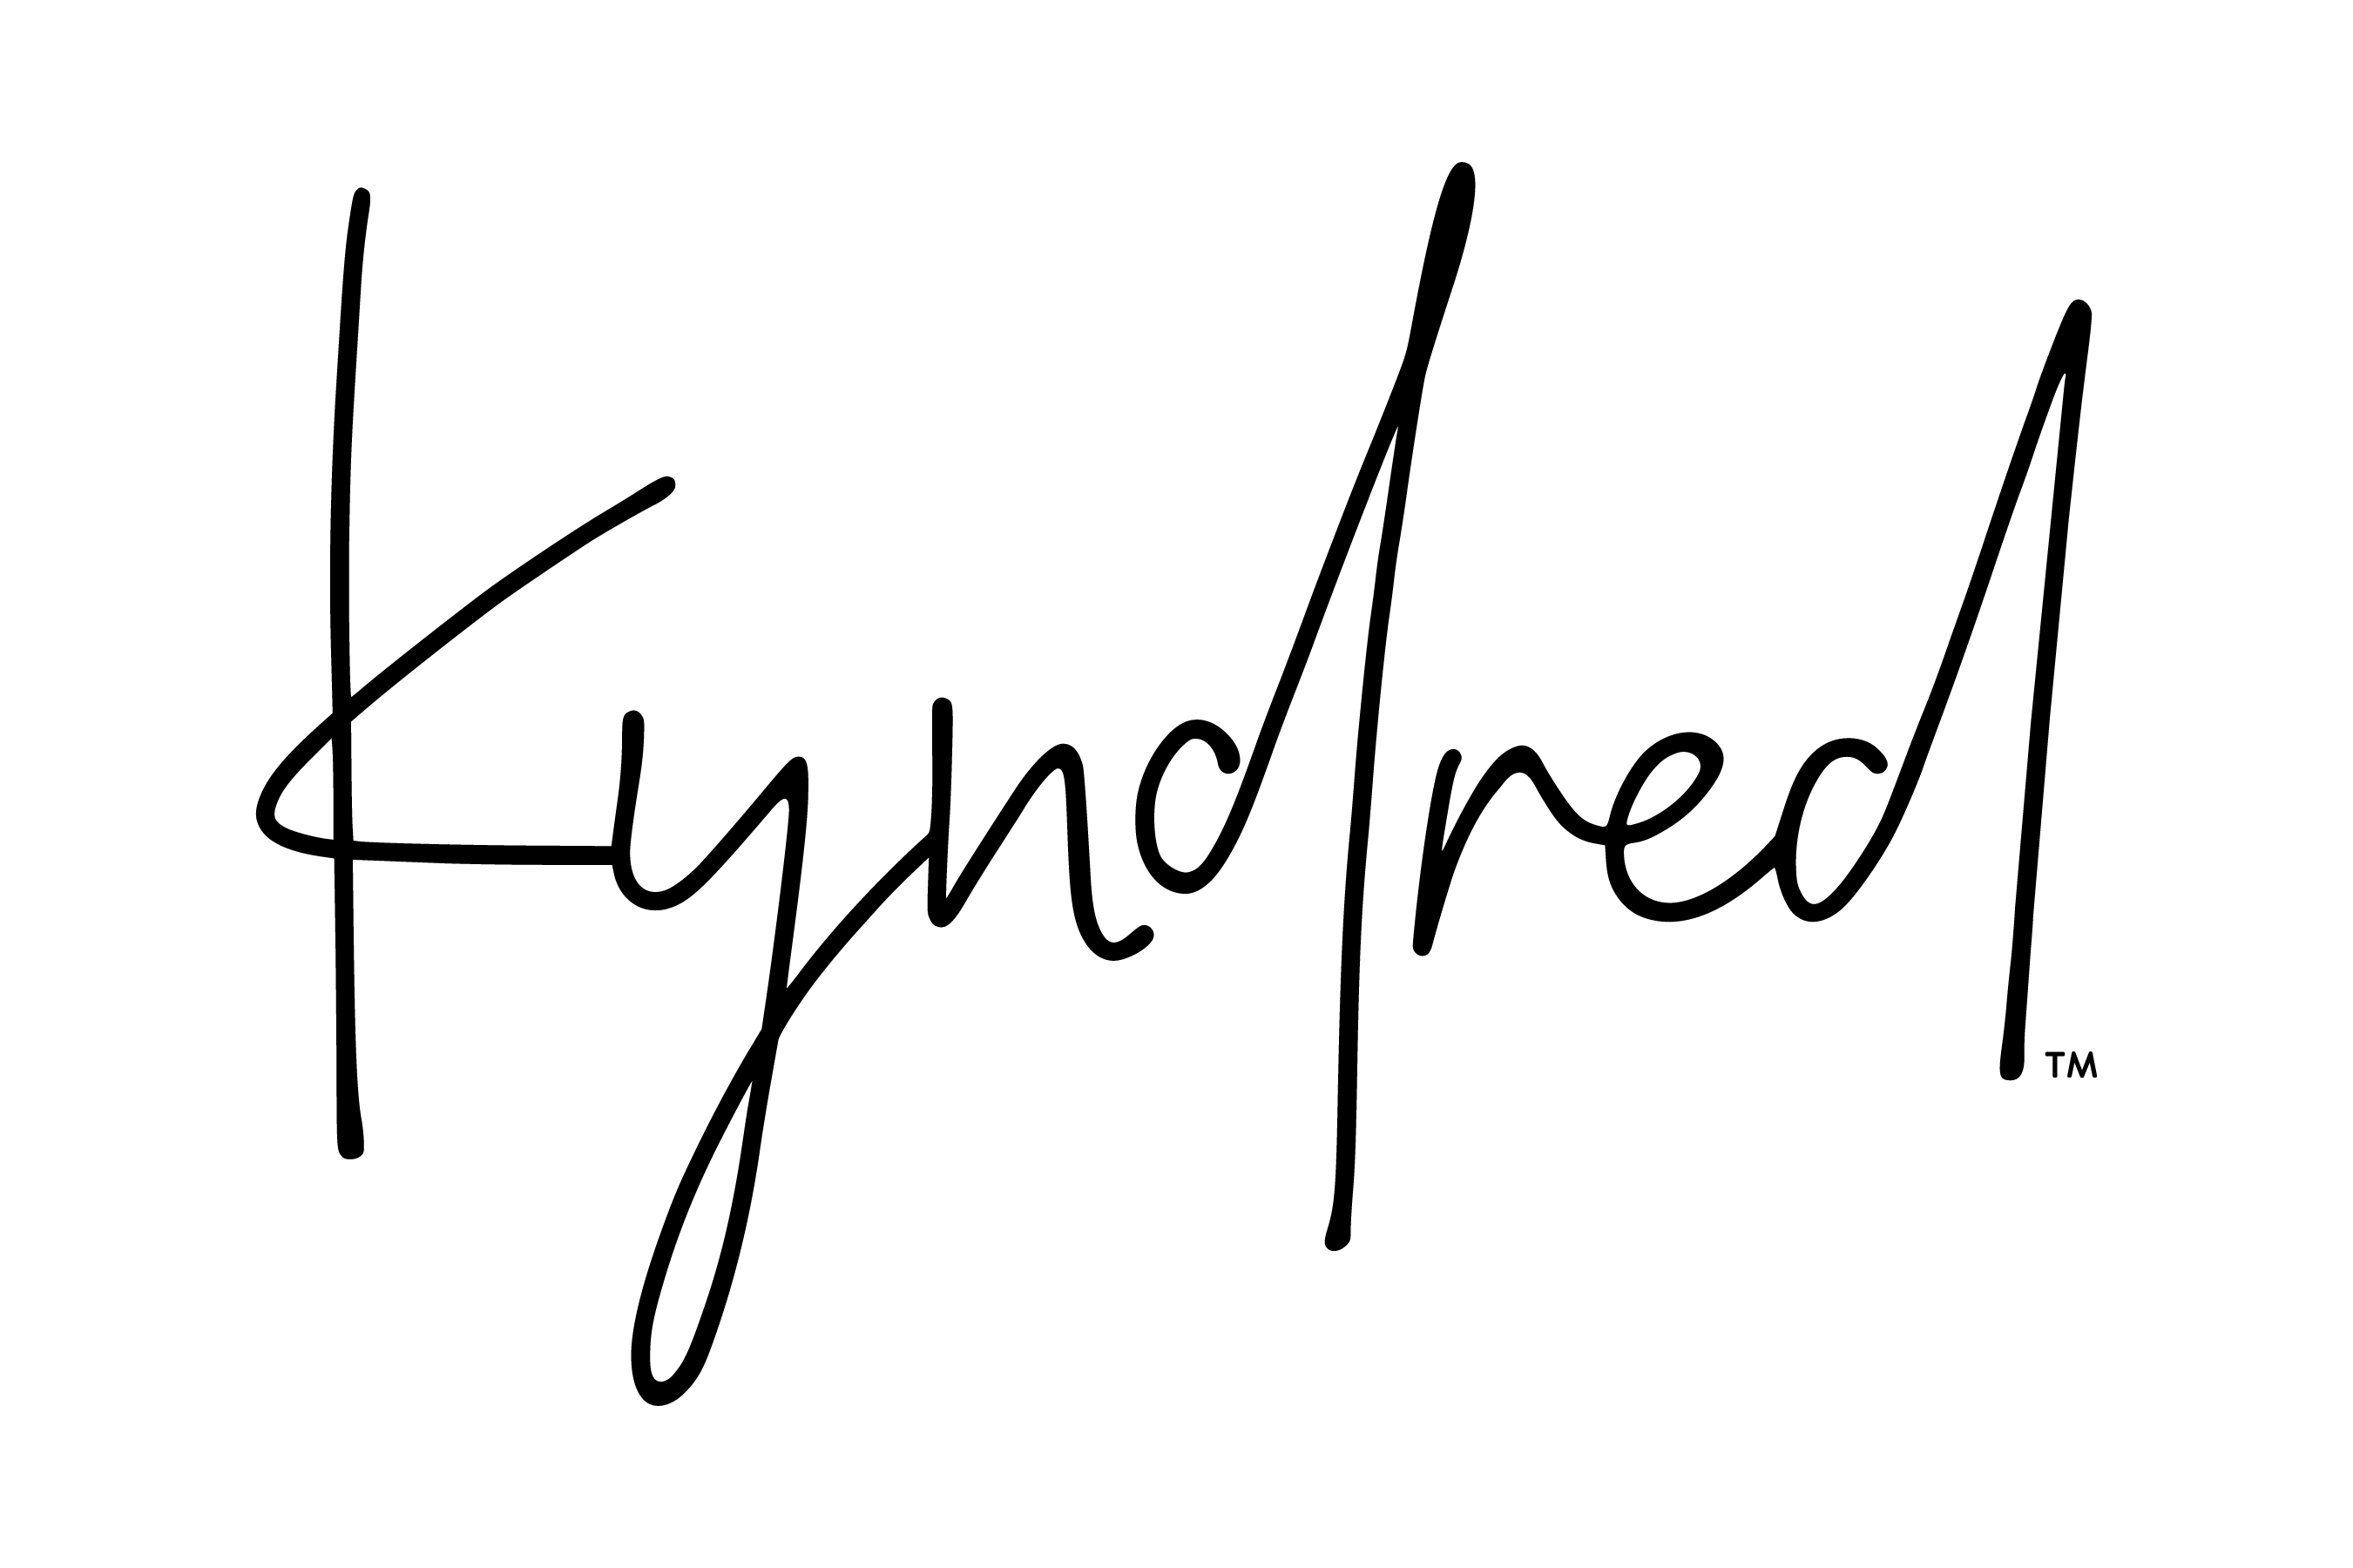 Kyndred-logo-black-on-white - Hailey Day